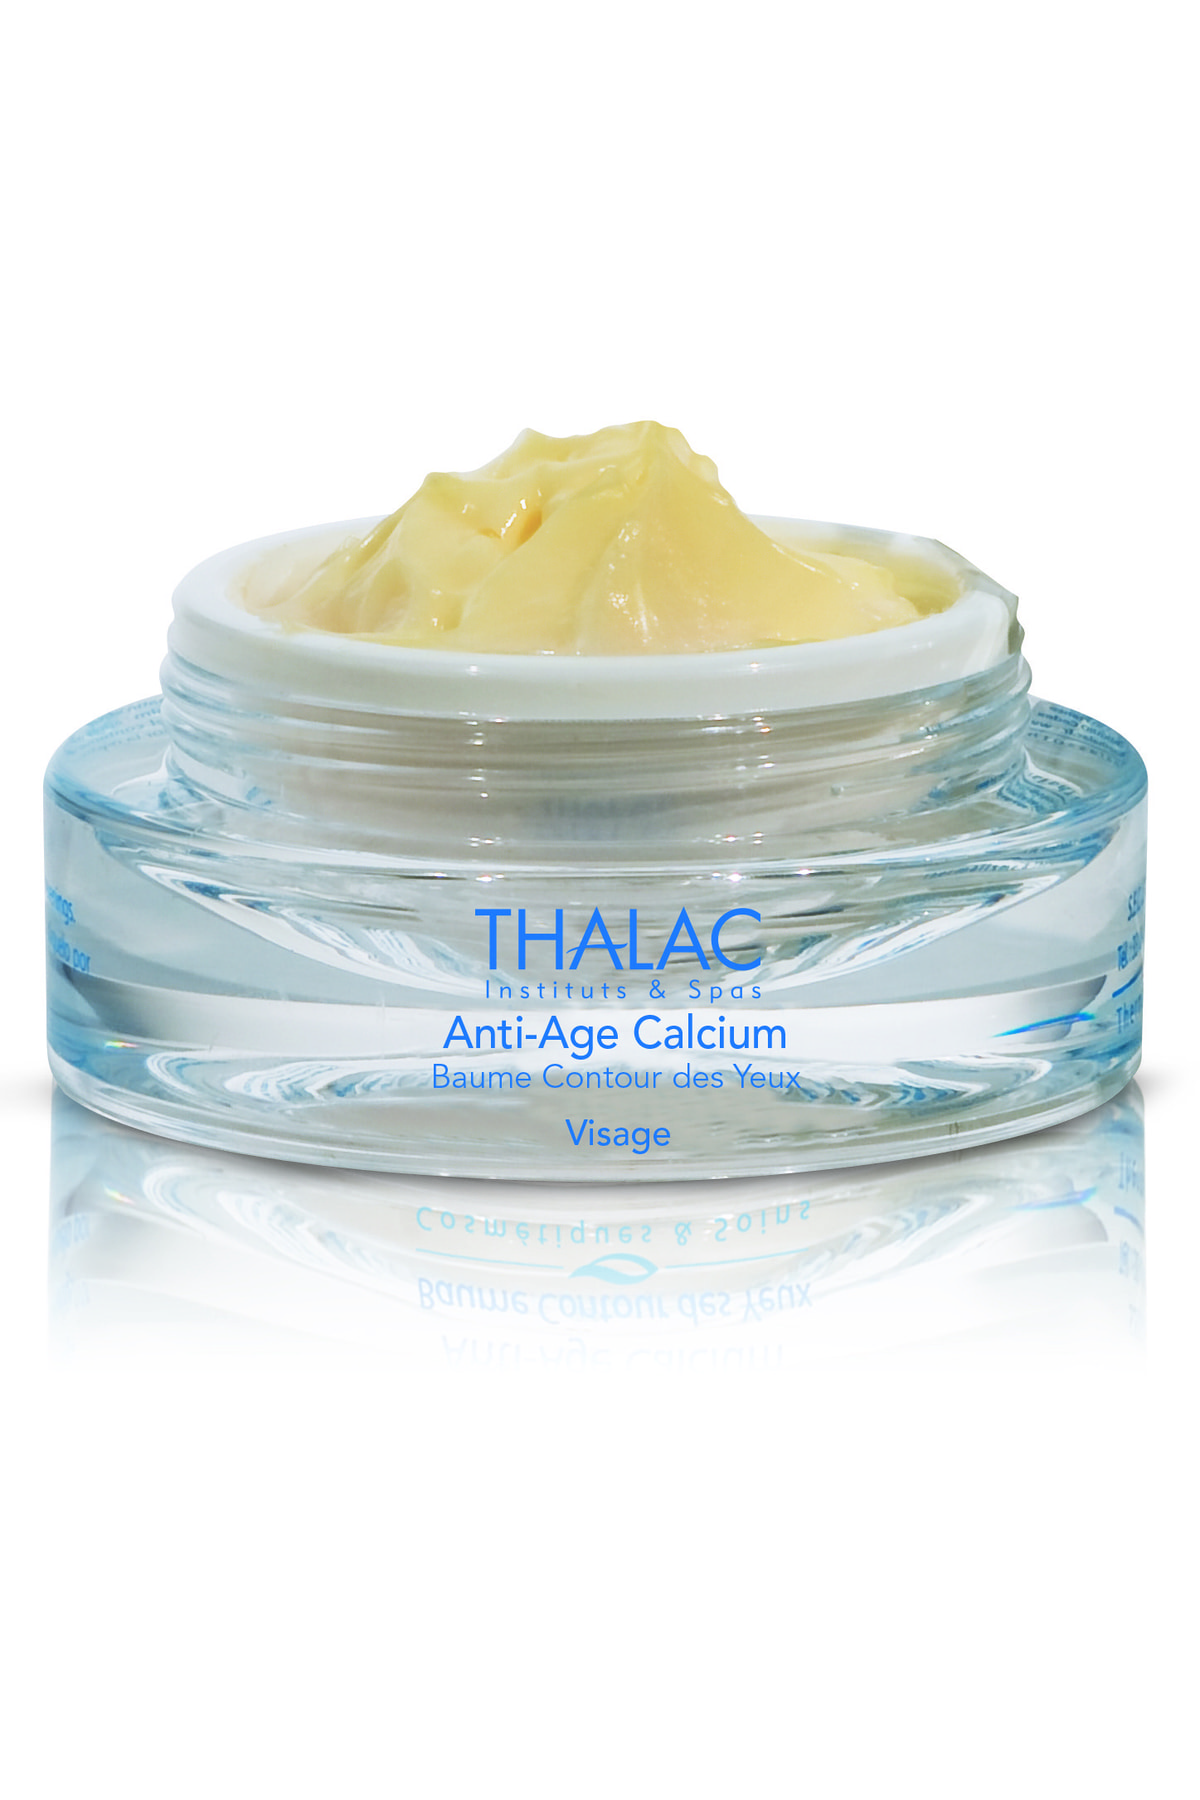 THALAC Baume Calcium Anti Aging Redensifiant Göz Altı Canlandırı Balm